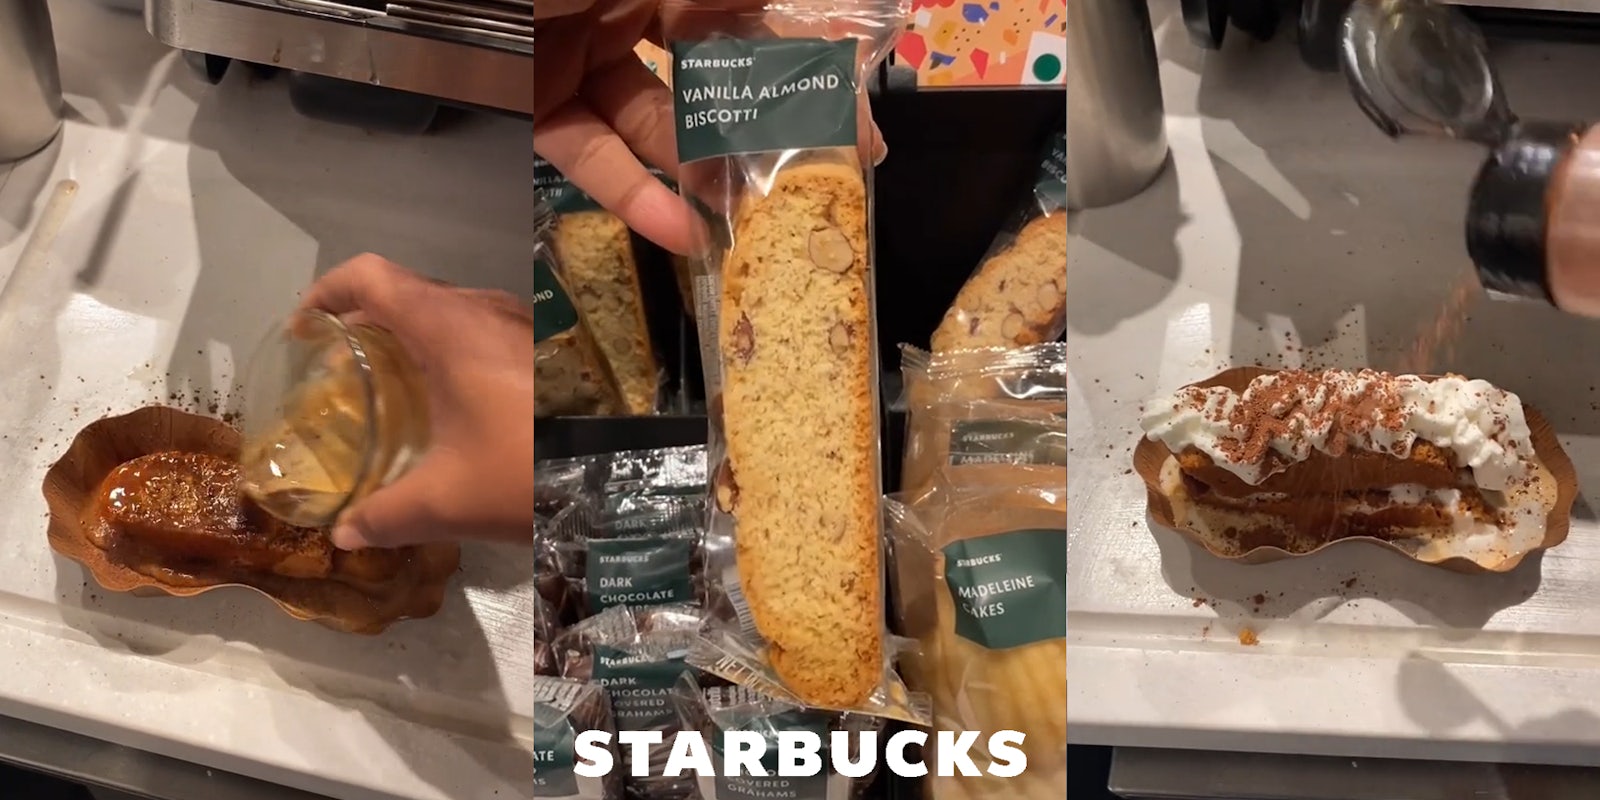 Starbucks employee pouring espresso over biscotti (l) Starbucks employee holding vanilla almond biscotti with Starbucks logo at bottom (c) Starbucks employee adding cinnamon to top of diy tiramisu (r)